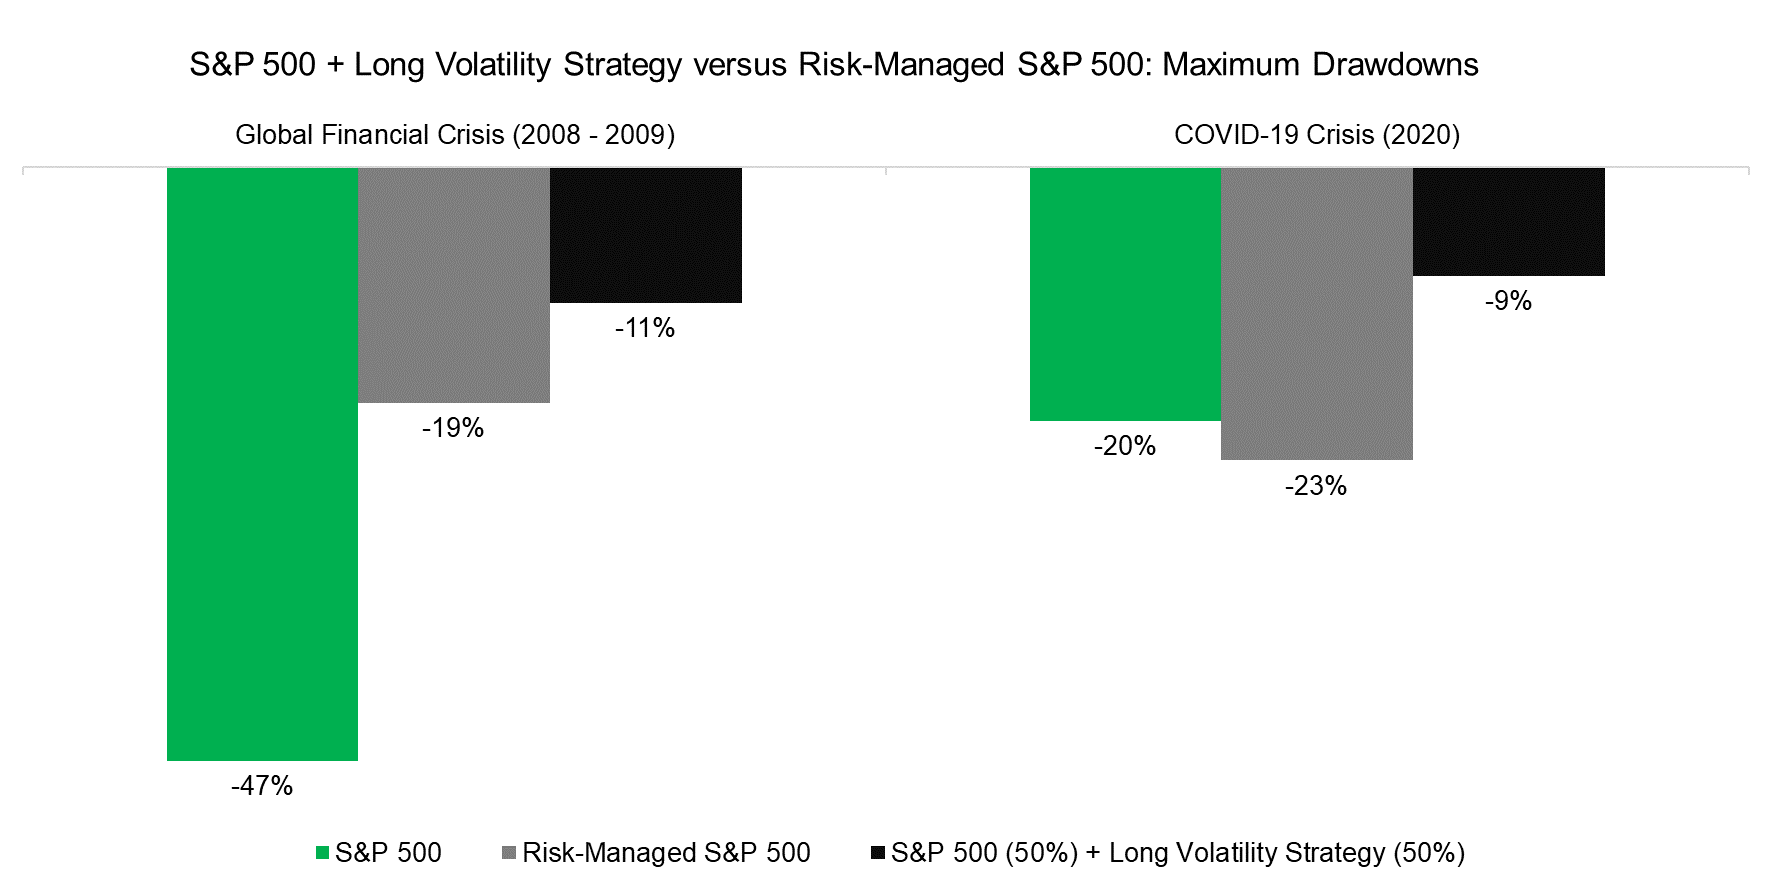 S&P 500 + Long Volatility Strategy versus Risk-Managed S&P 500 Maximum Drawdowns